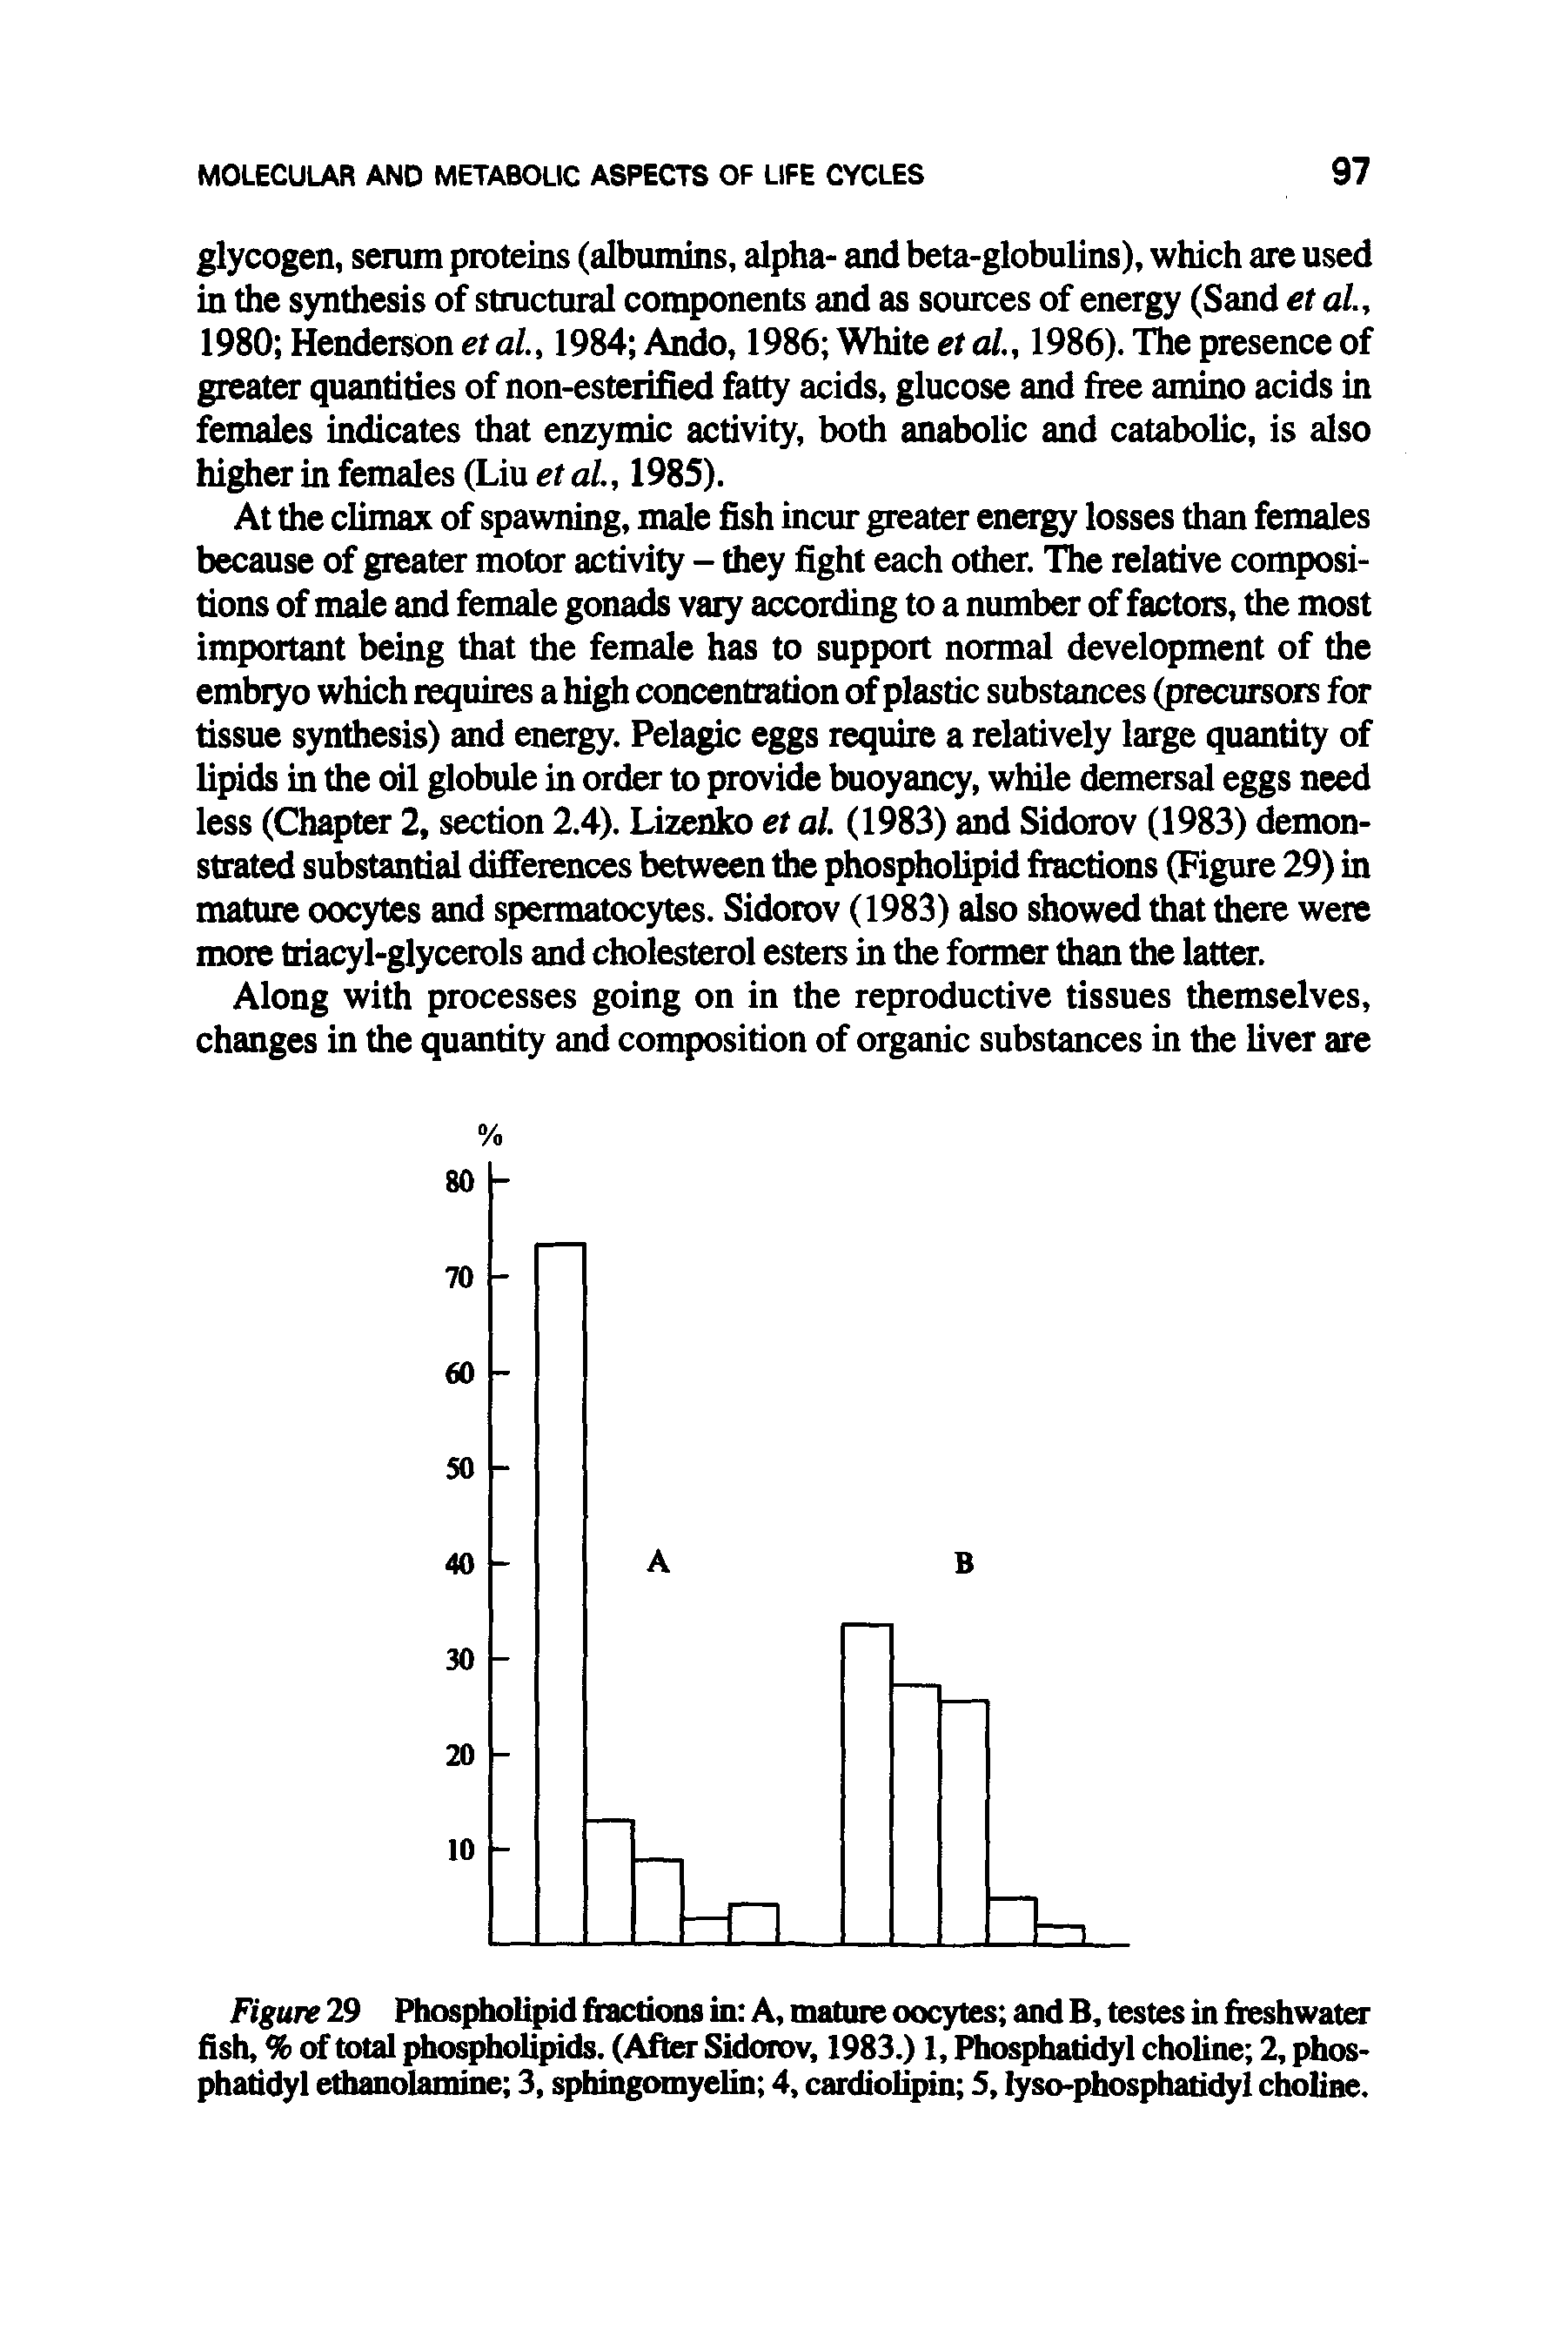 Figure 29 Phospholipid fractions in A, mature oocytes and B, testes in freshwater fish, % of total phospholipids. (After Sidorov, 1983.) 1, Phosphatidyl choline 2, phosphatidyl ethanolamine 3, sphingomyelin 4, cardiolipin S, lyso-phosphatidyl choline.